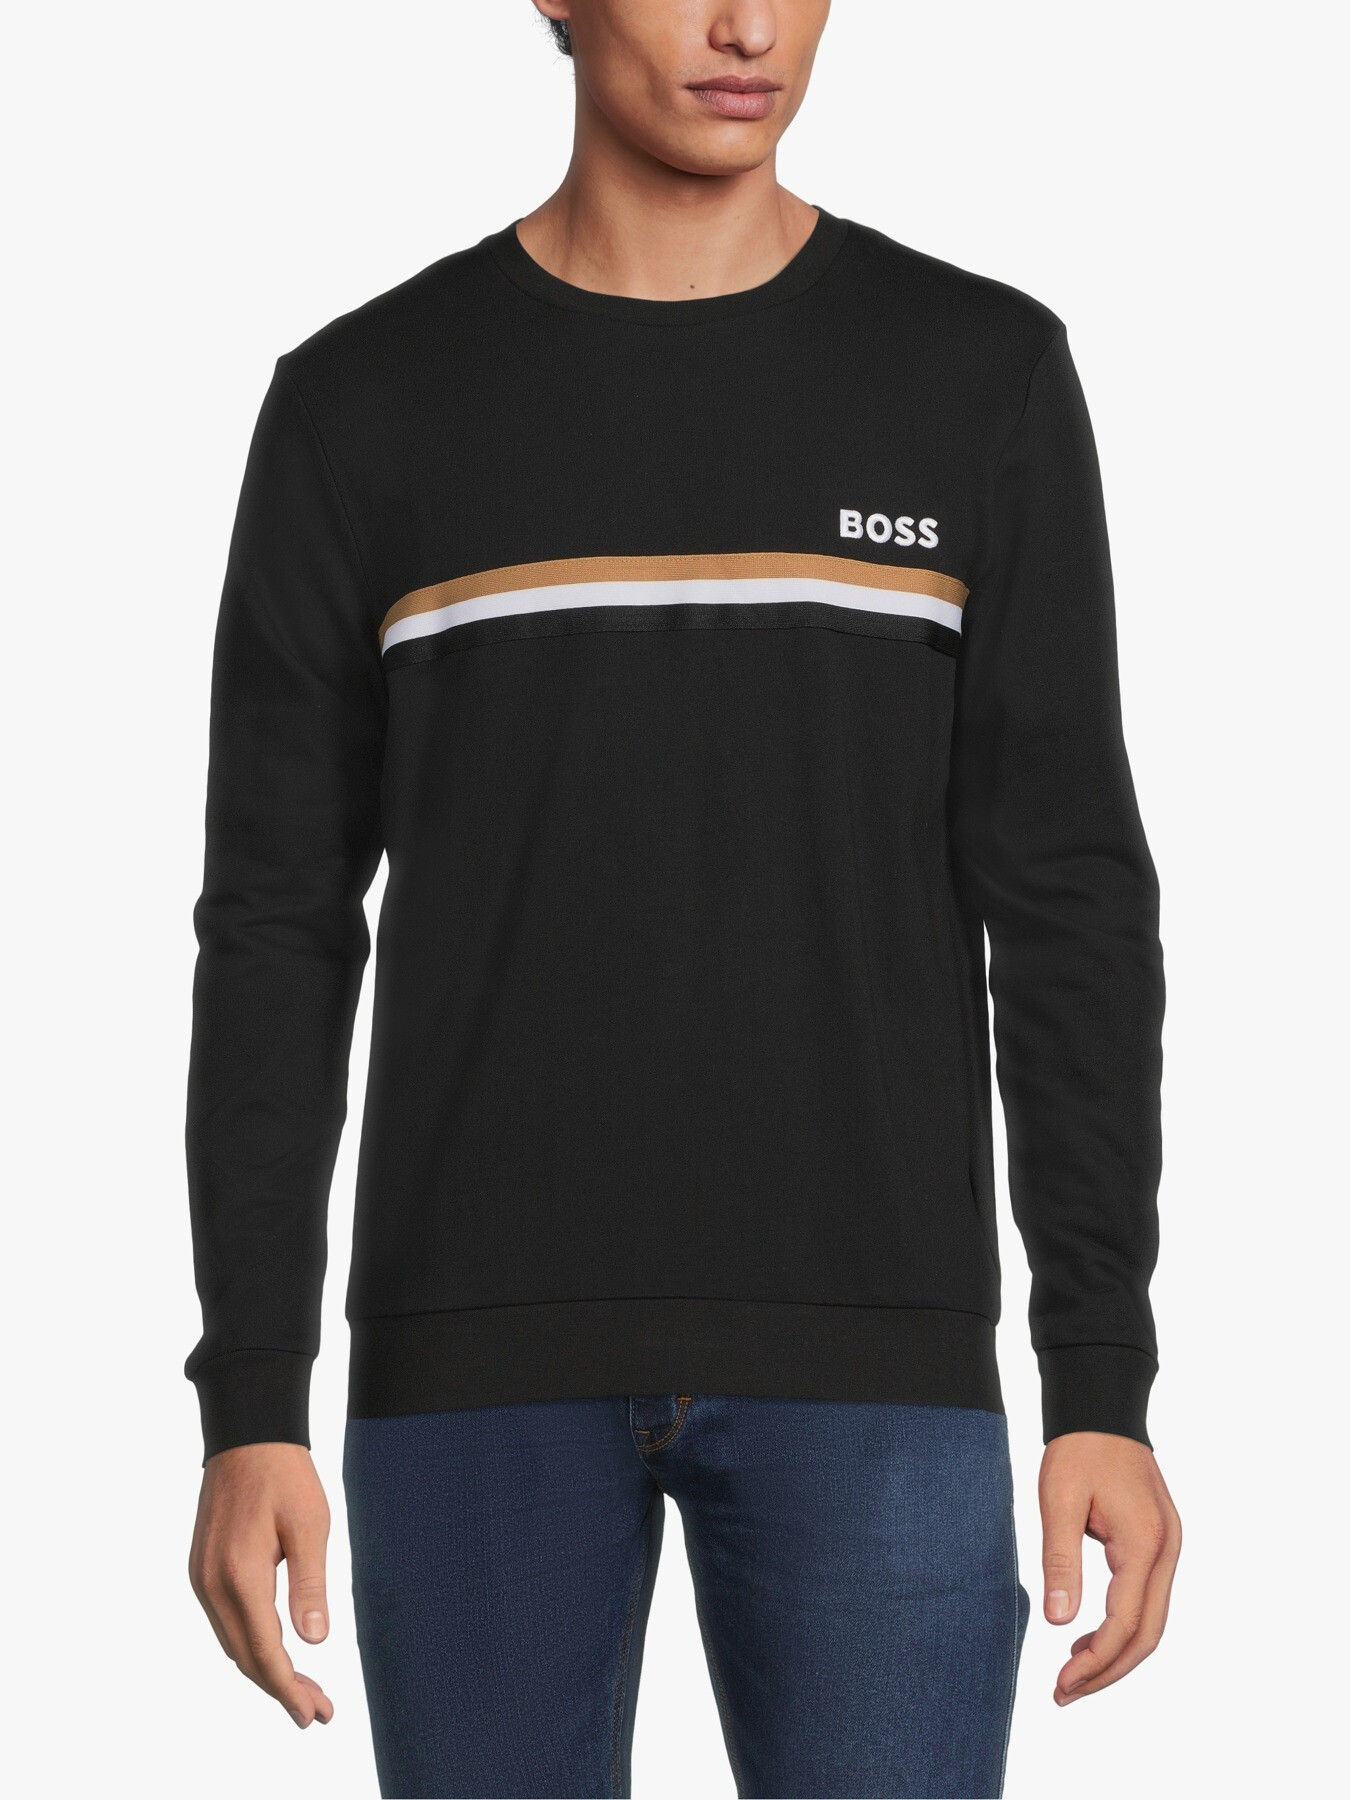 Men's BOSS Iconic Sweatshirt | Fenwick